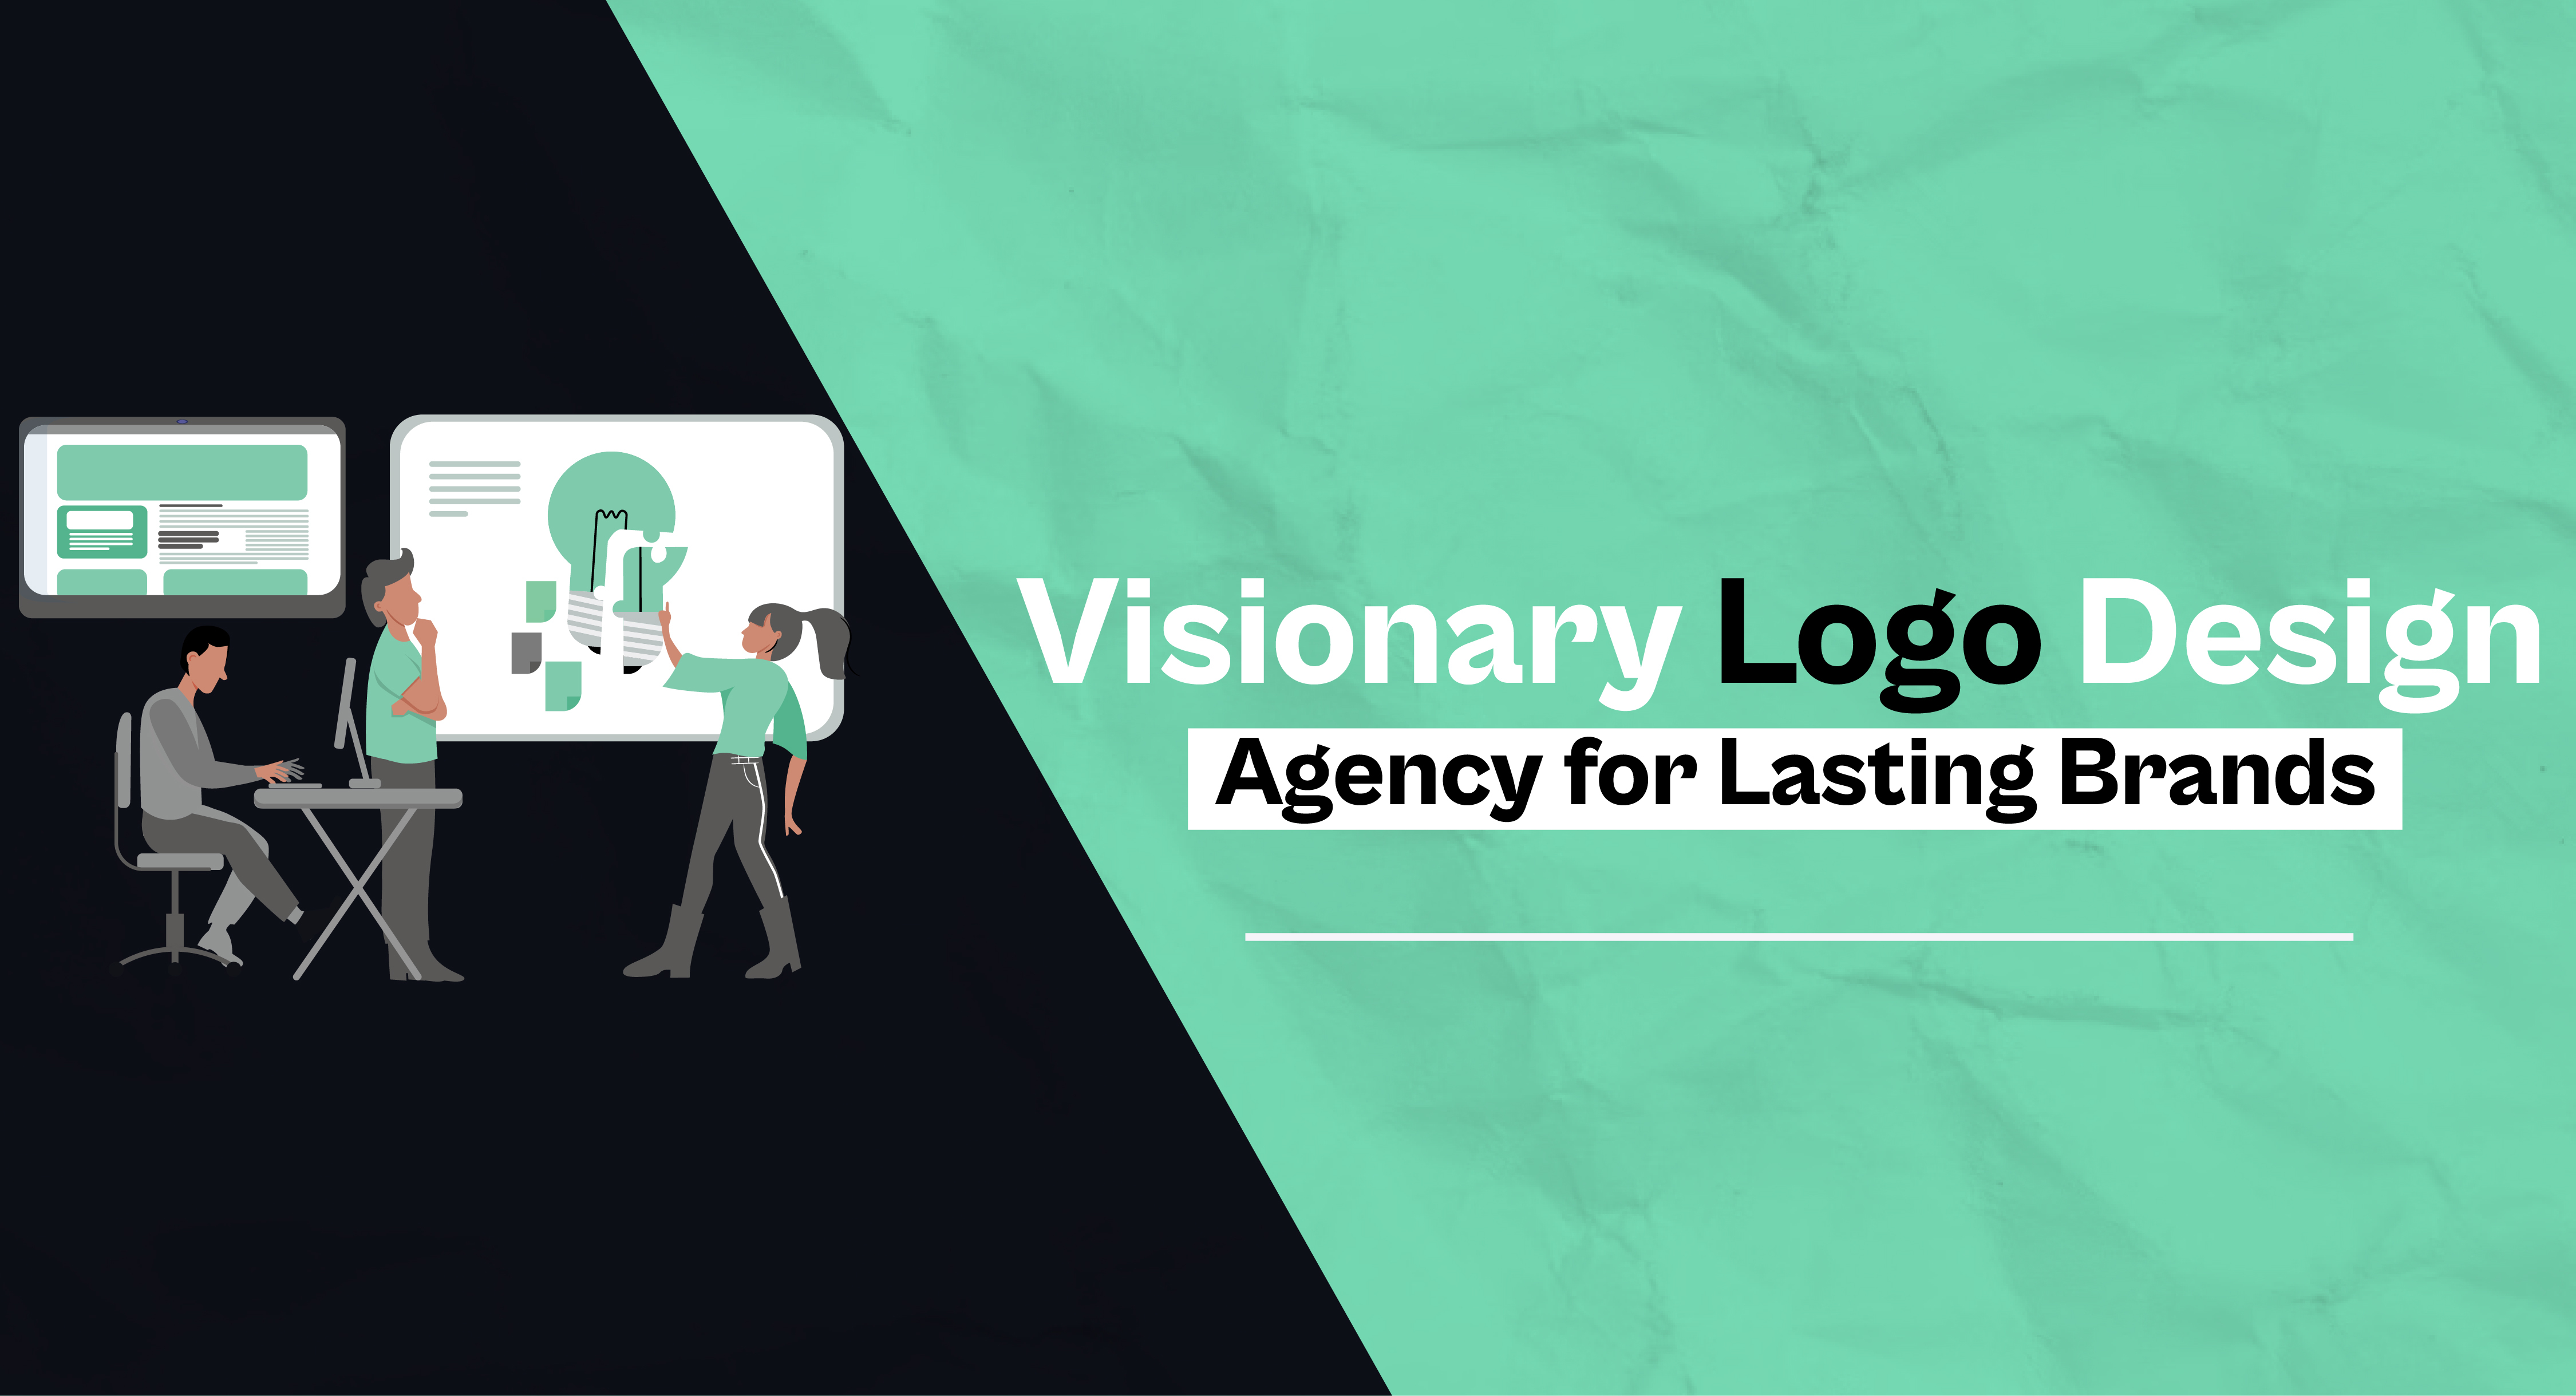 Visionary Logo Design Agency for Lasting Brands